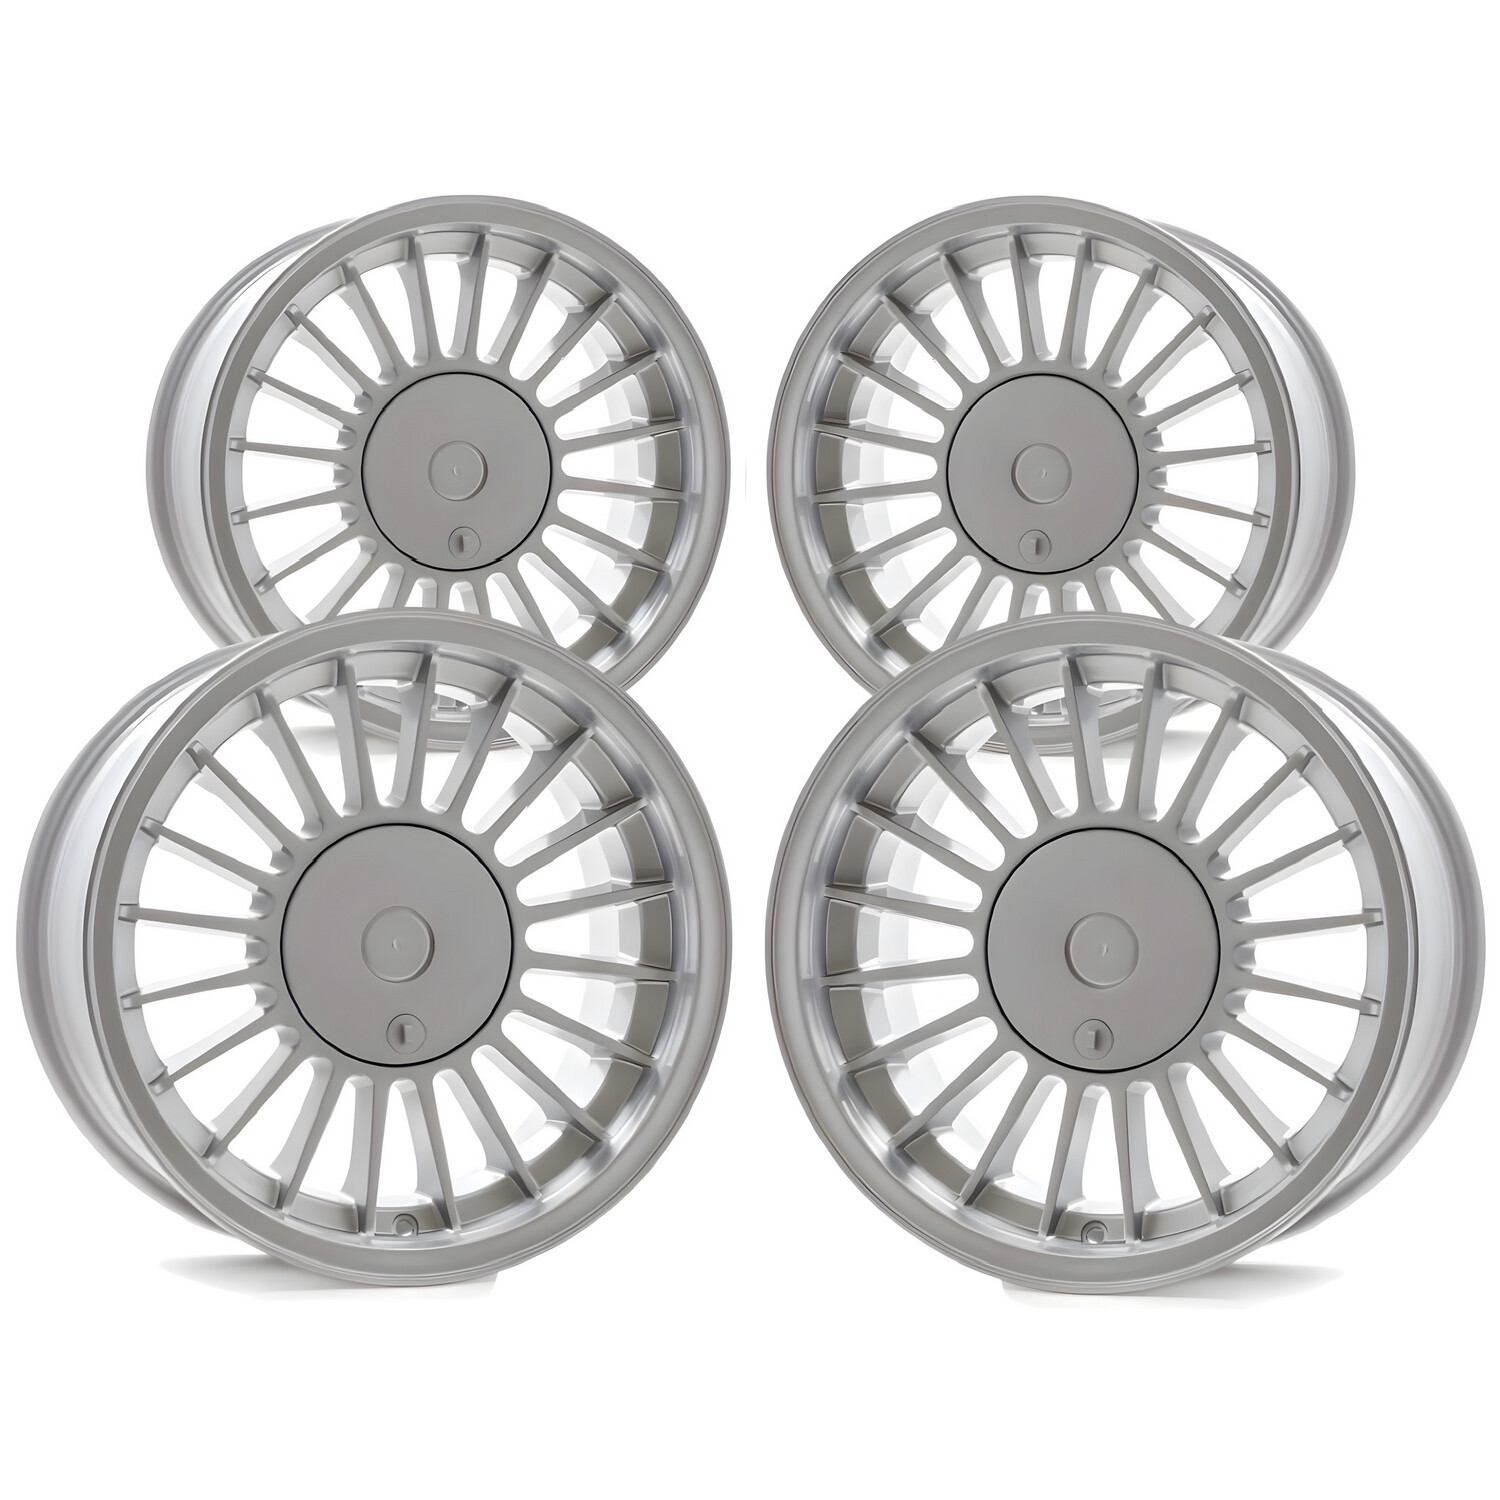 17" Maxilite Alpina Classic Softline Style Wheels (4x100 17x7.5 ET25)